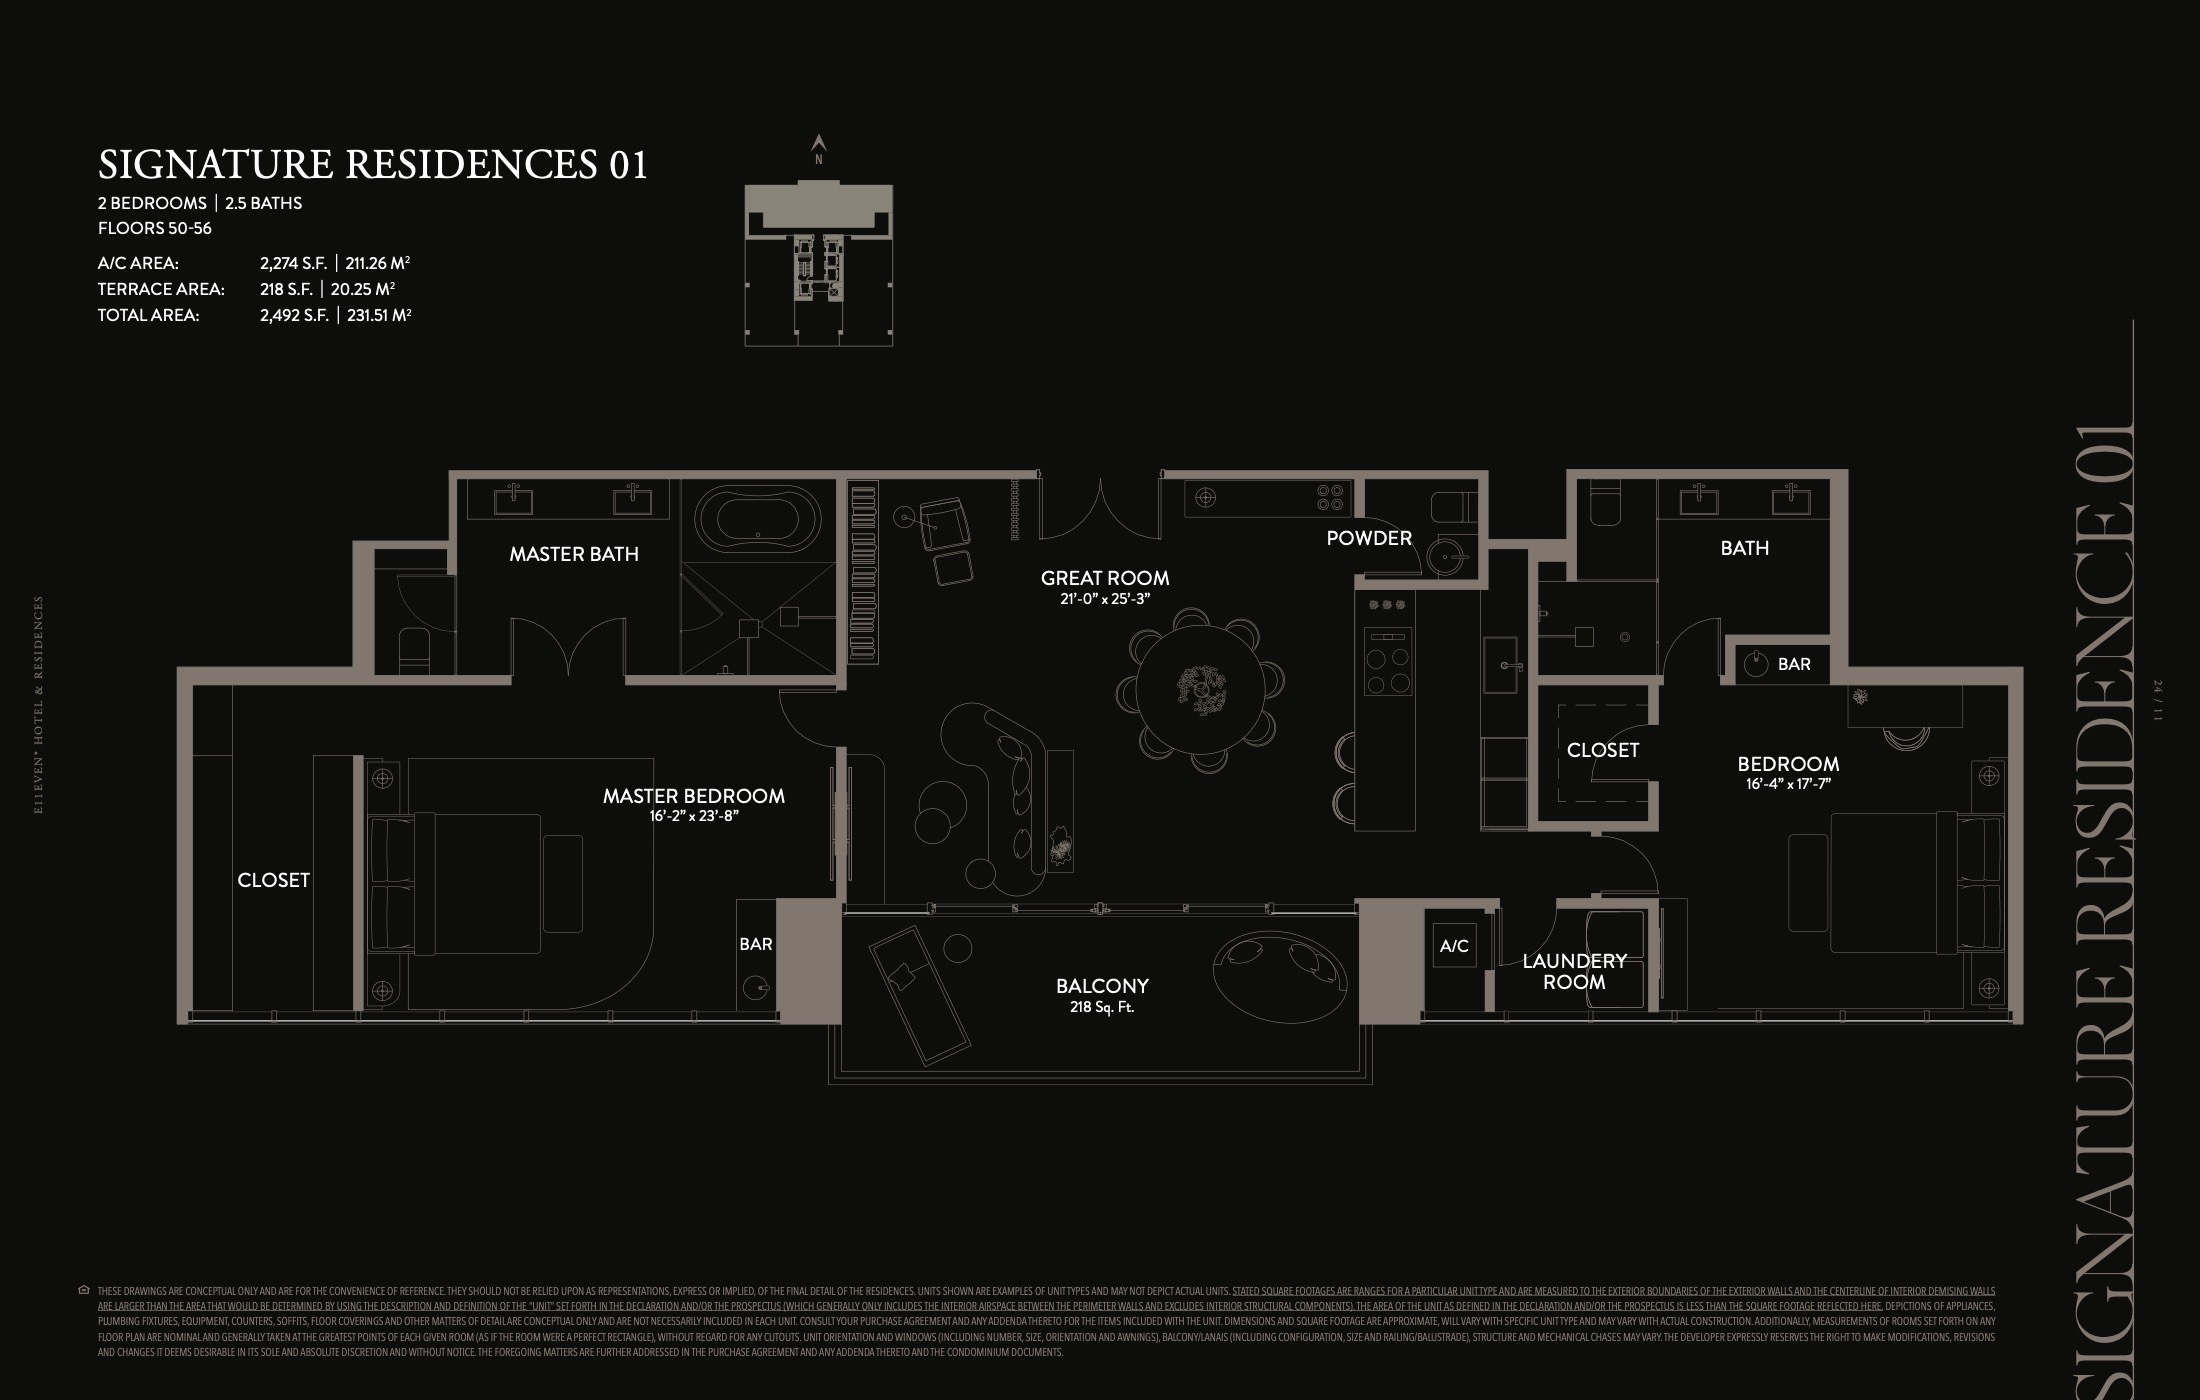 Floor Plan for E11even Residences Miami Floorplans, Signature Residences 01